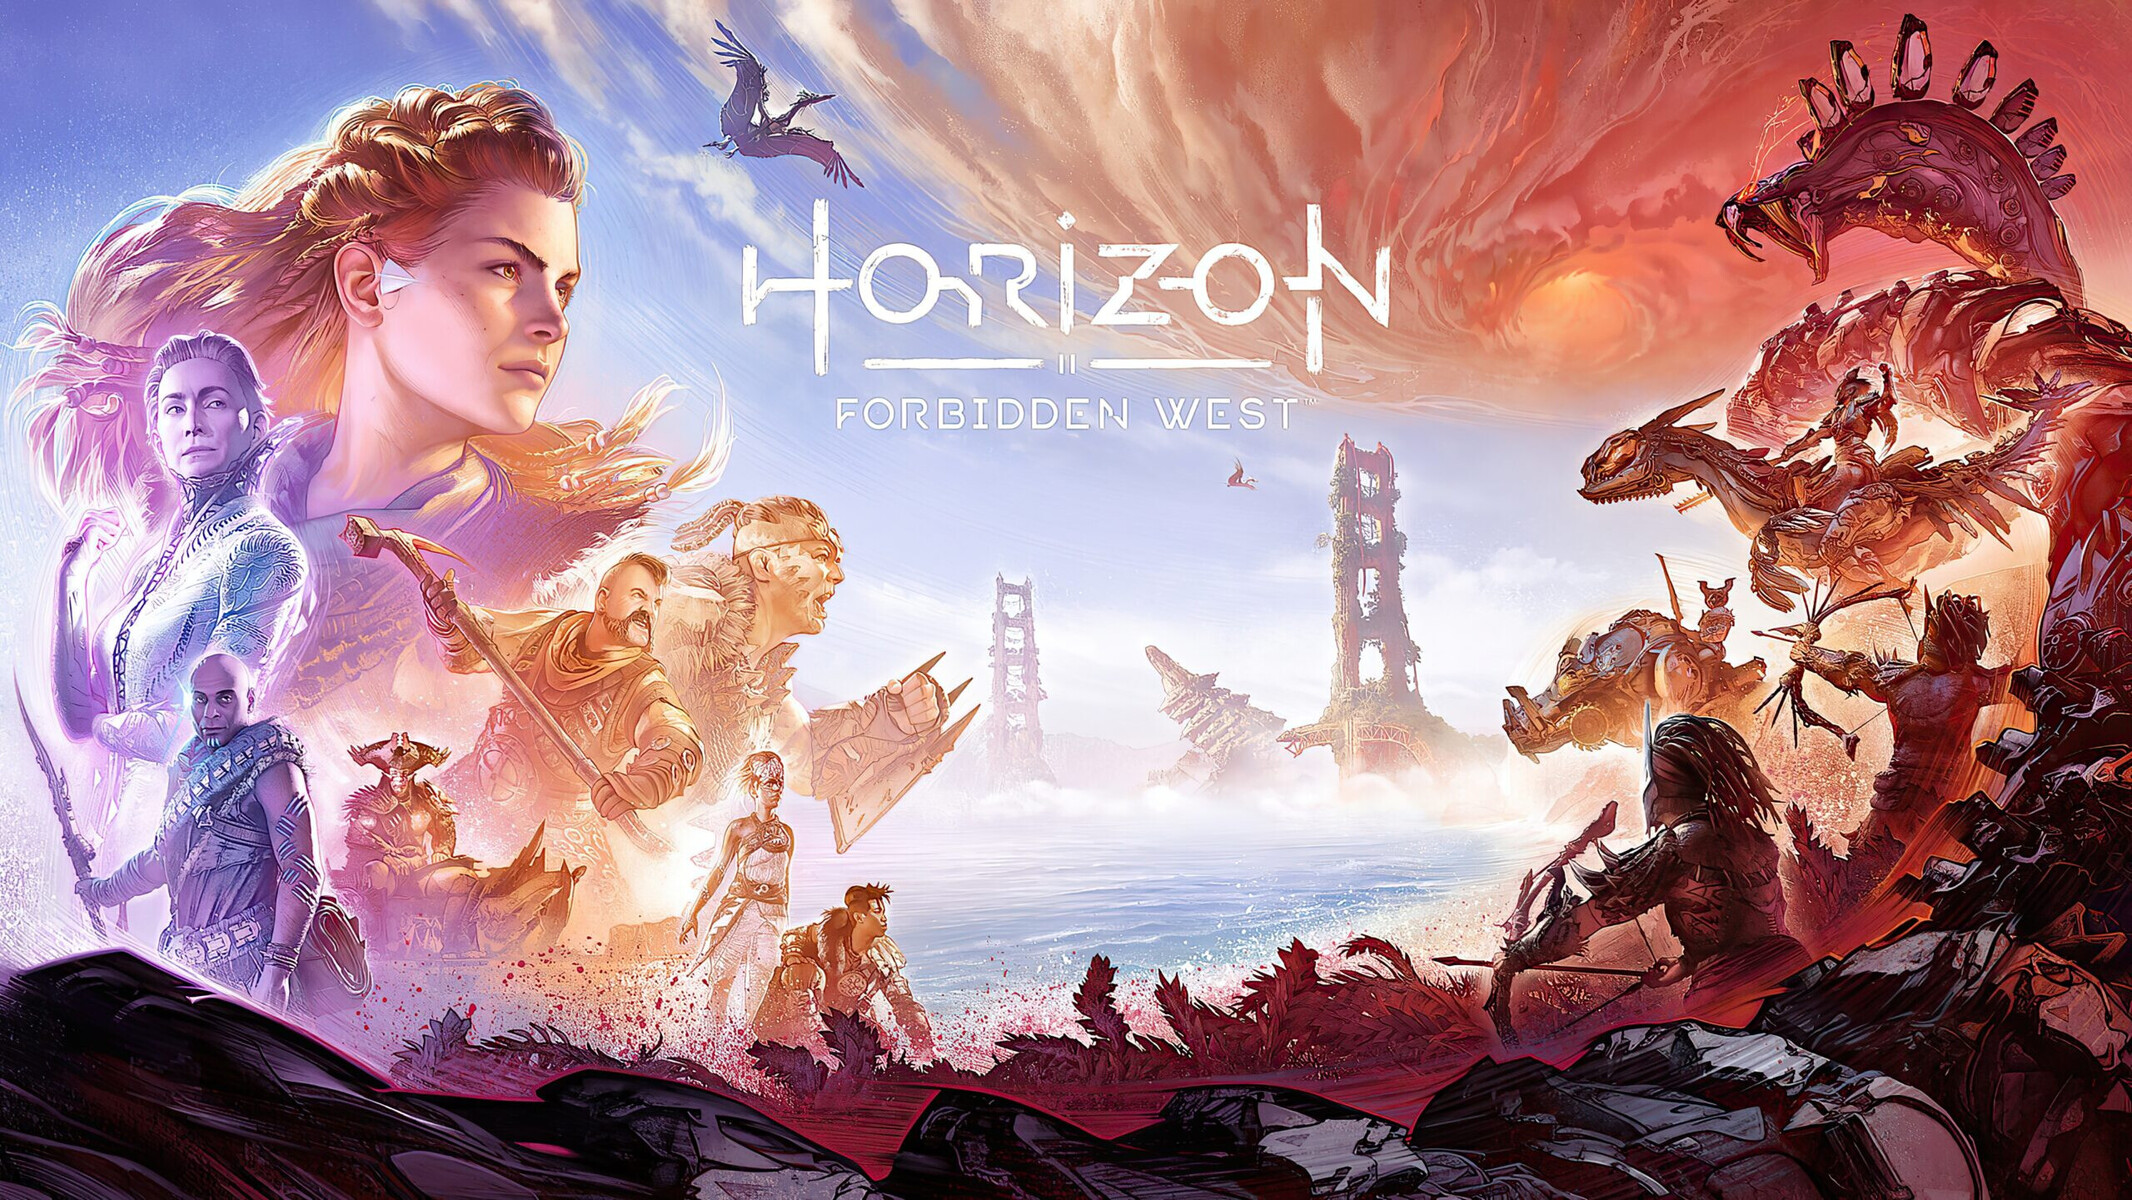 Horizon Forbidden West PC Version "Imminent" According to Leaker.